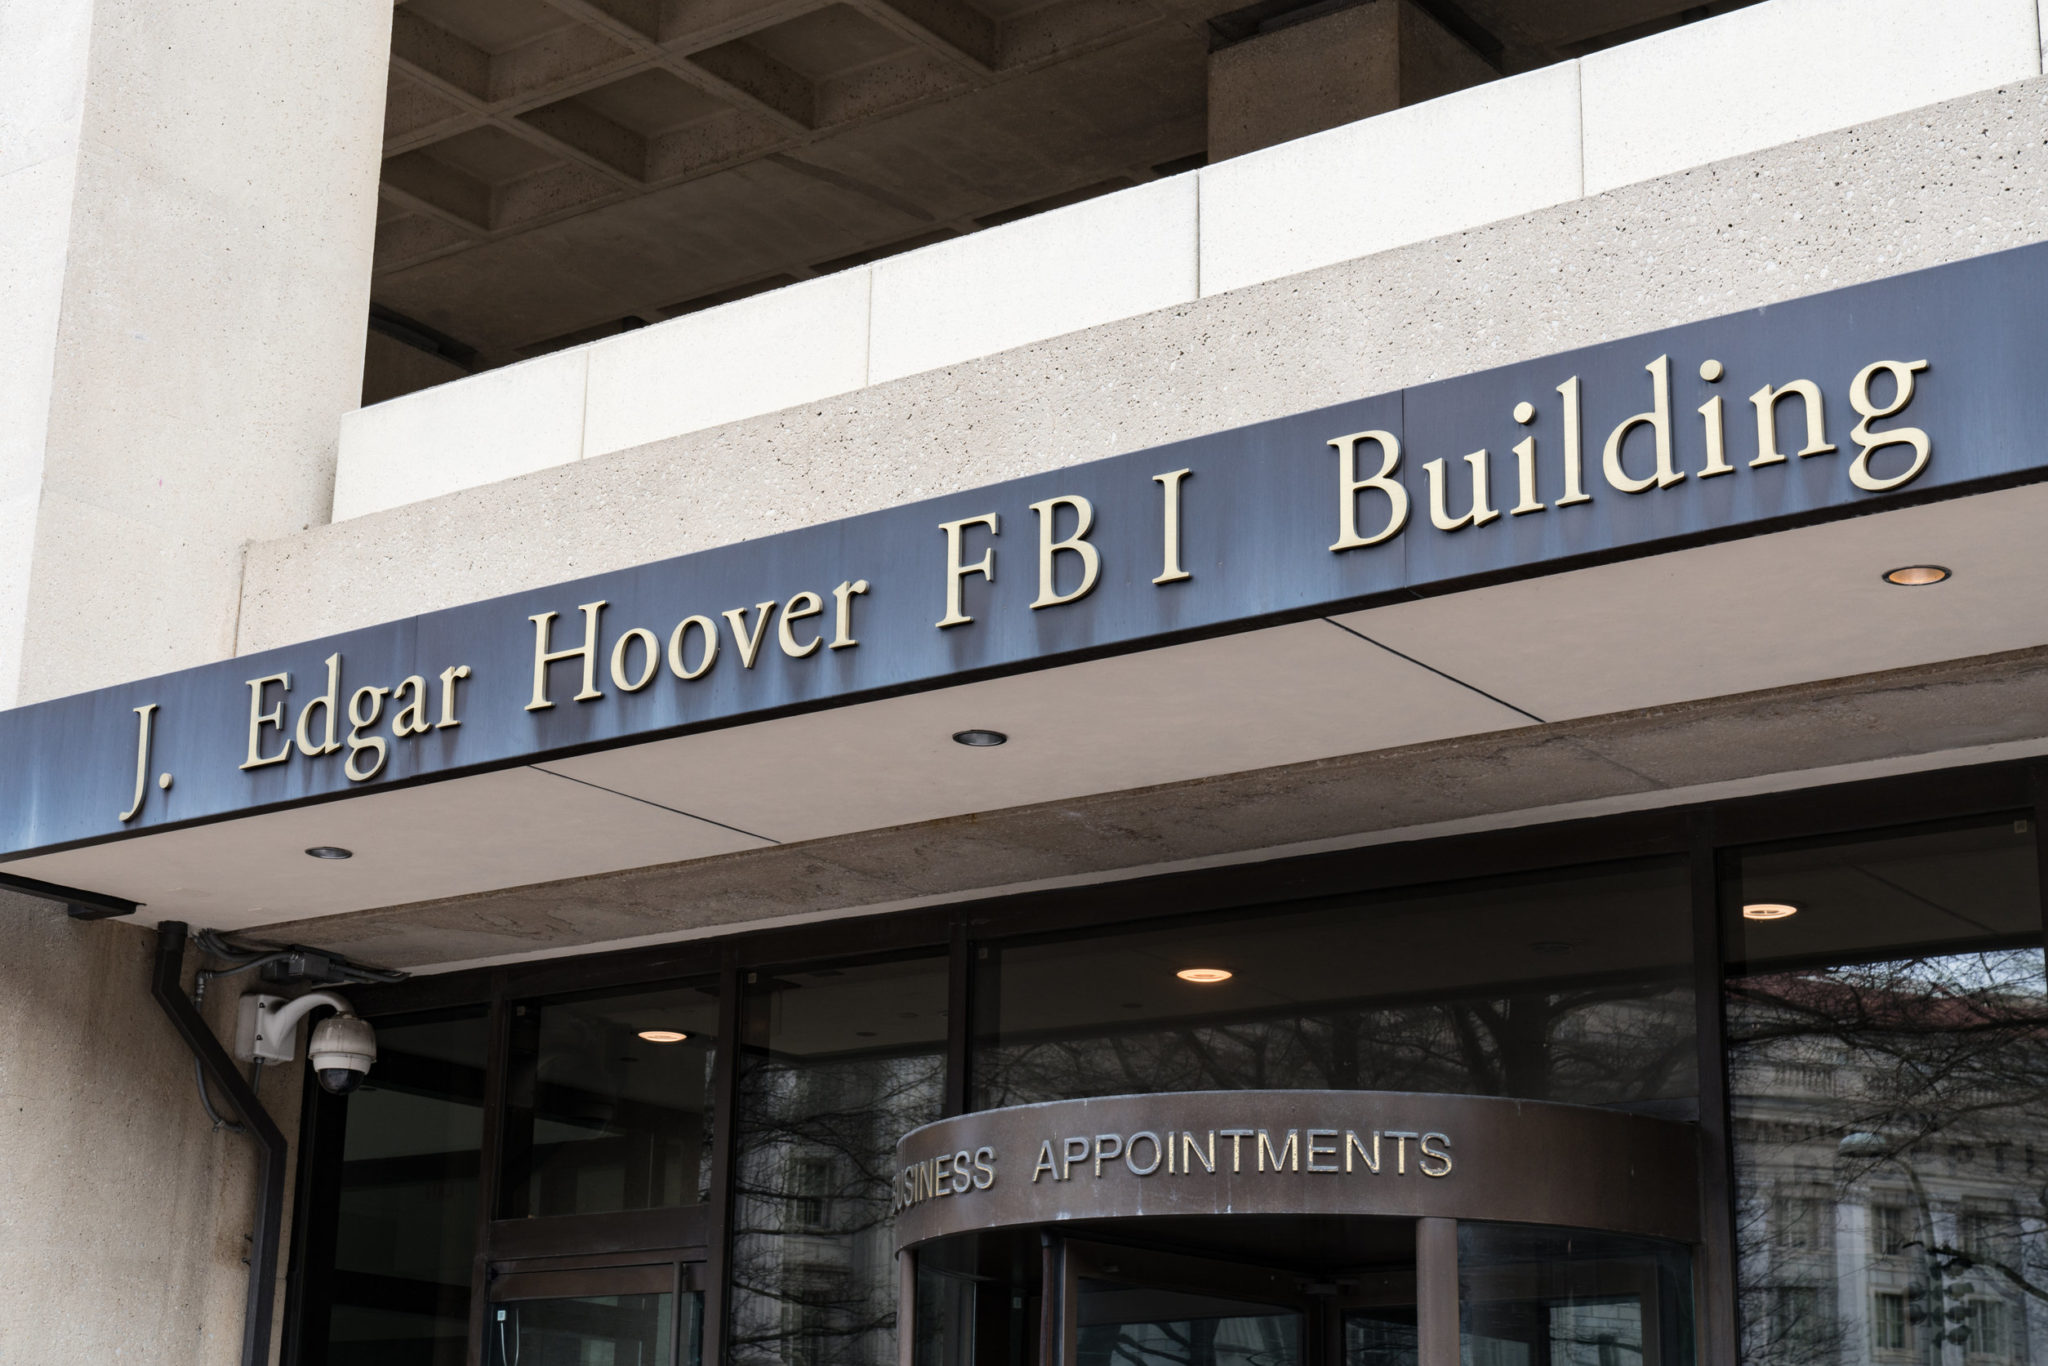 Entrance to FBI Building in Washington DC